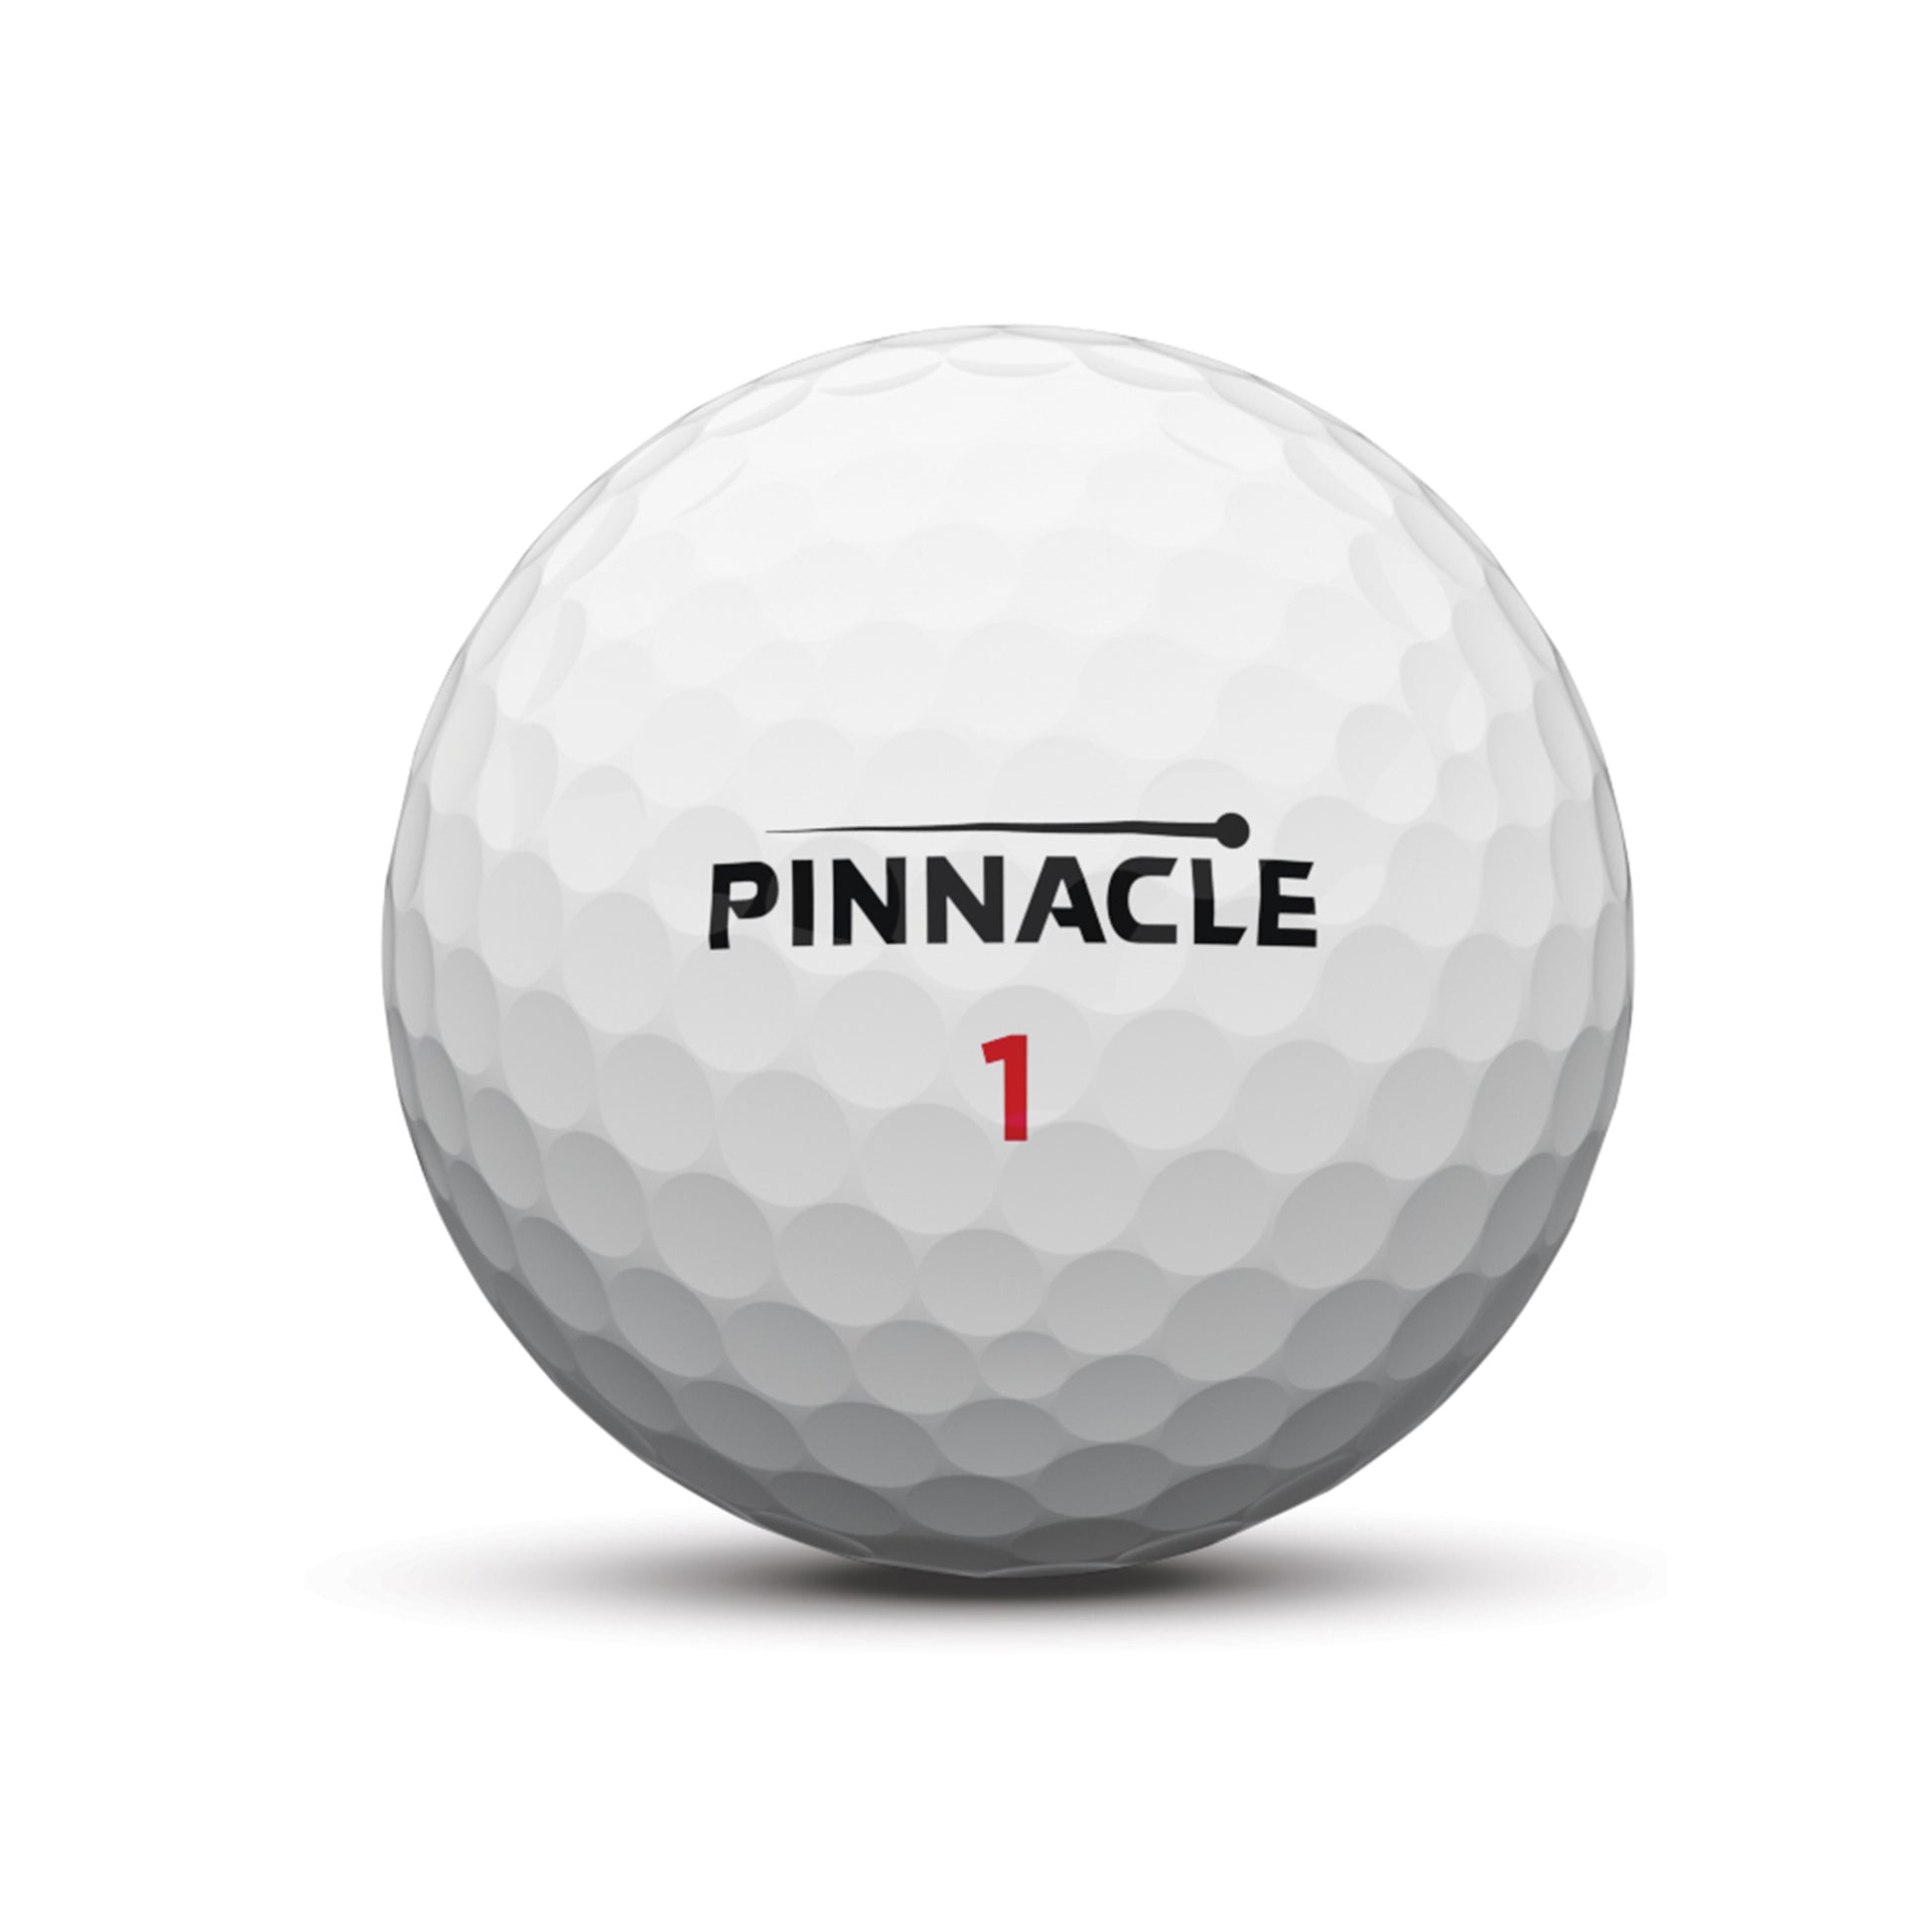 Pinnacle Gold Precision Used Golf Balls